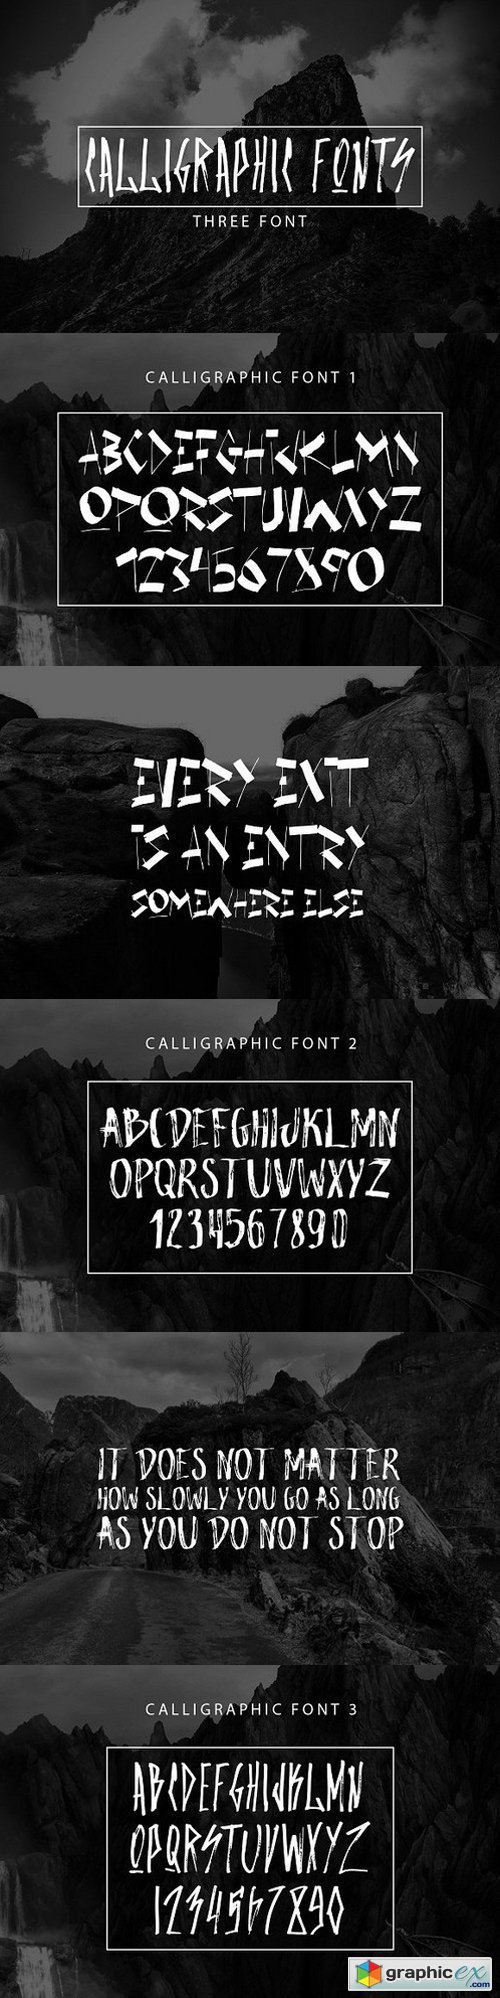 Set of three calligraphic fonts